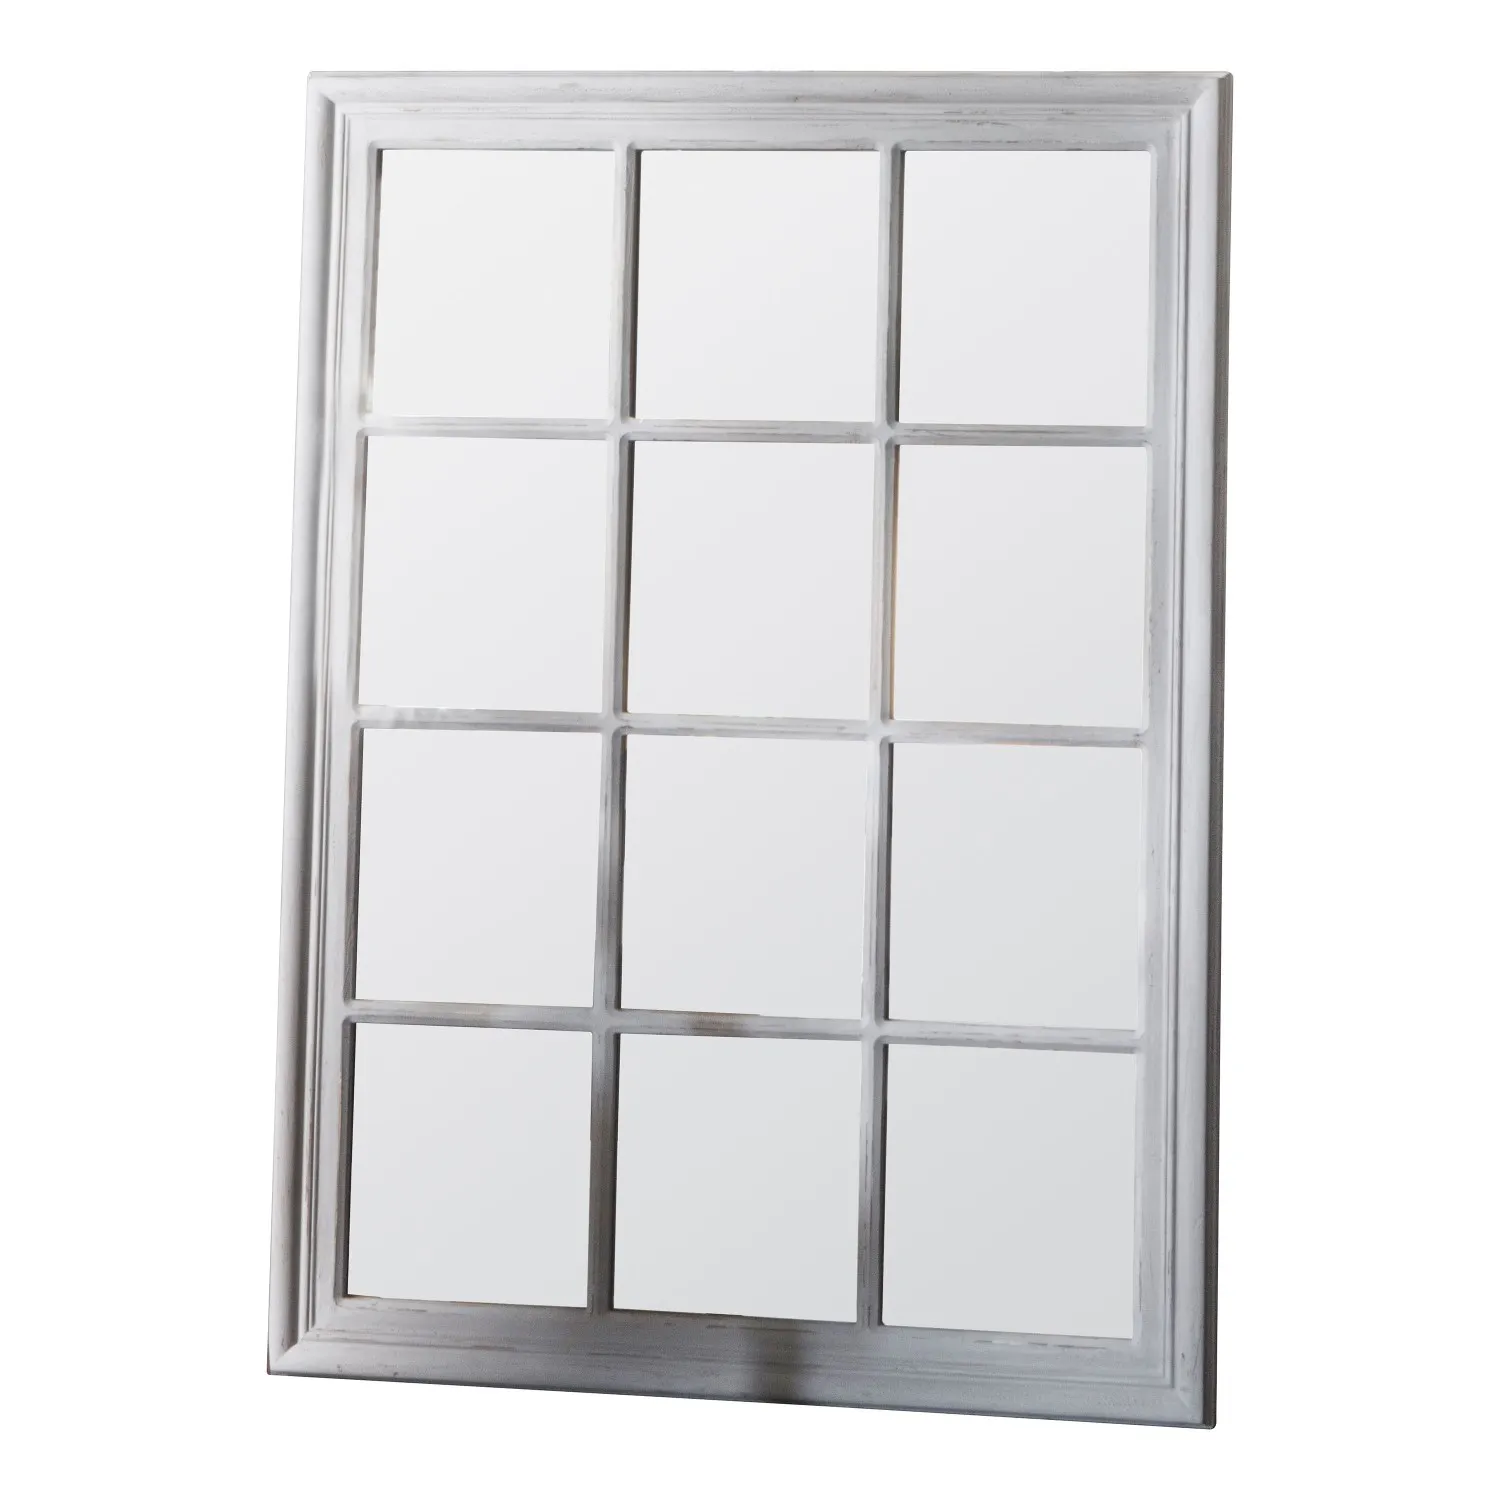 Large Antique White Painted Window Wall Mirror Multi Pane Design